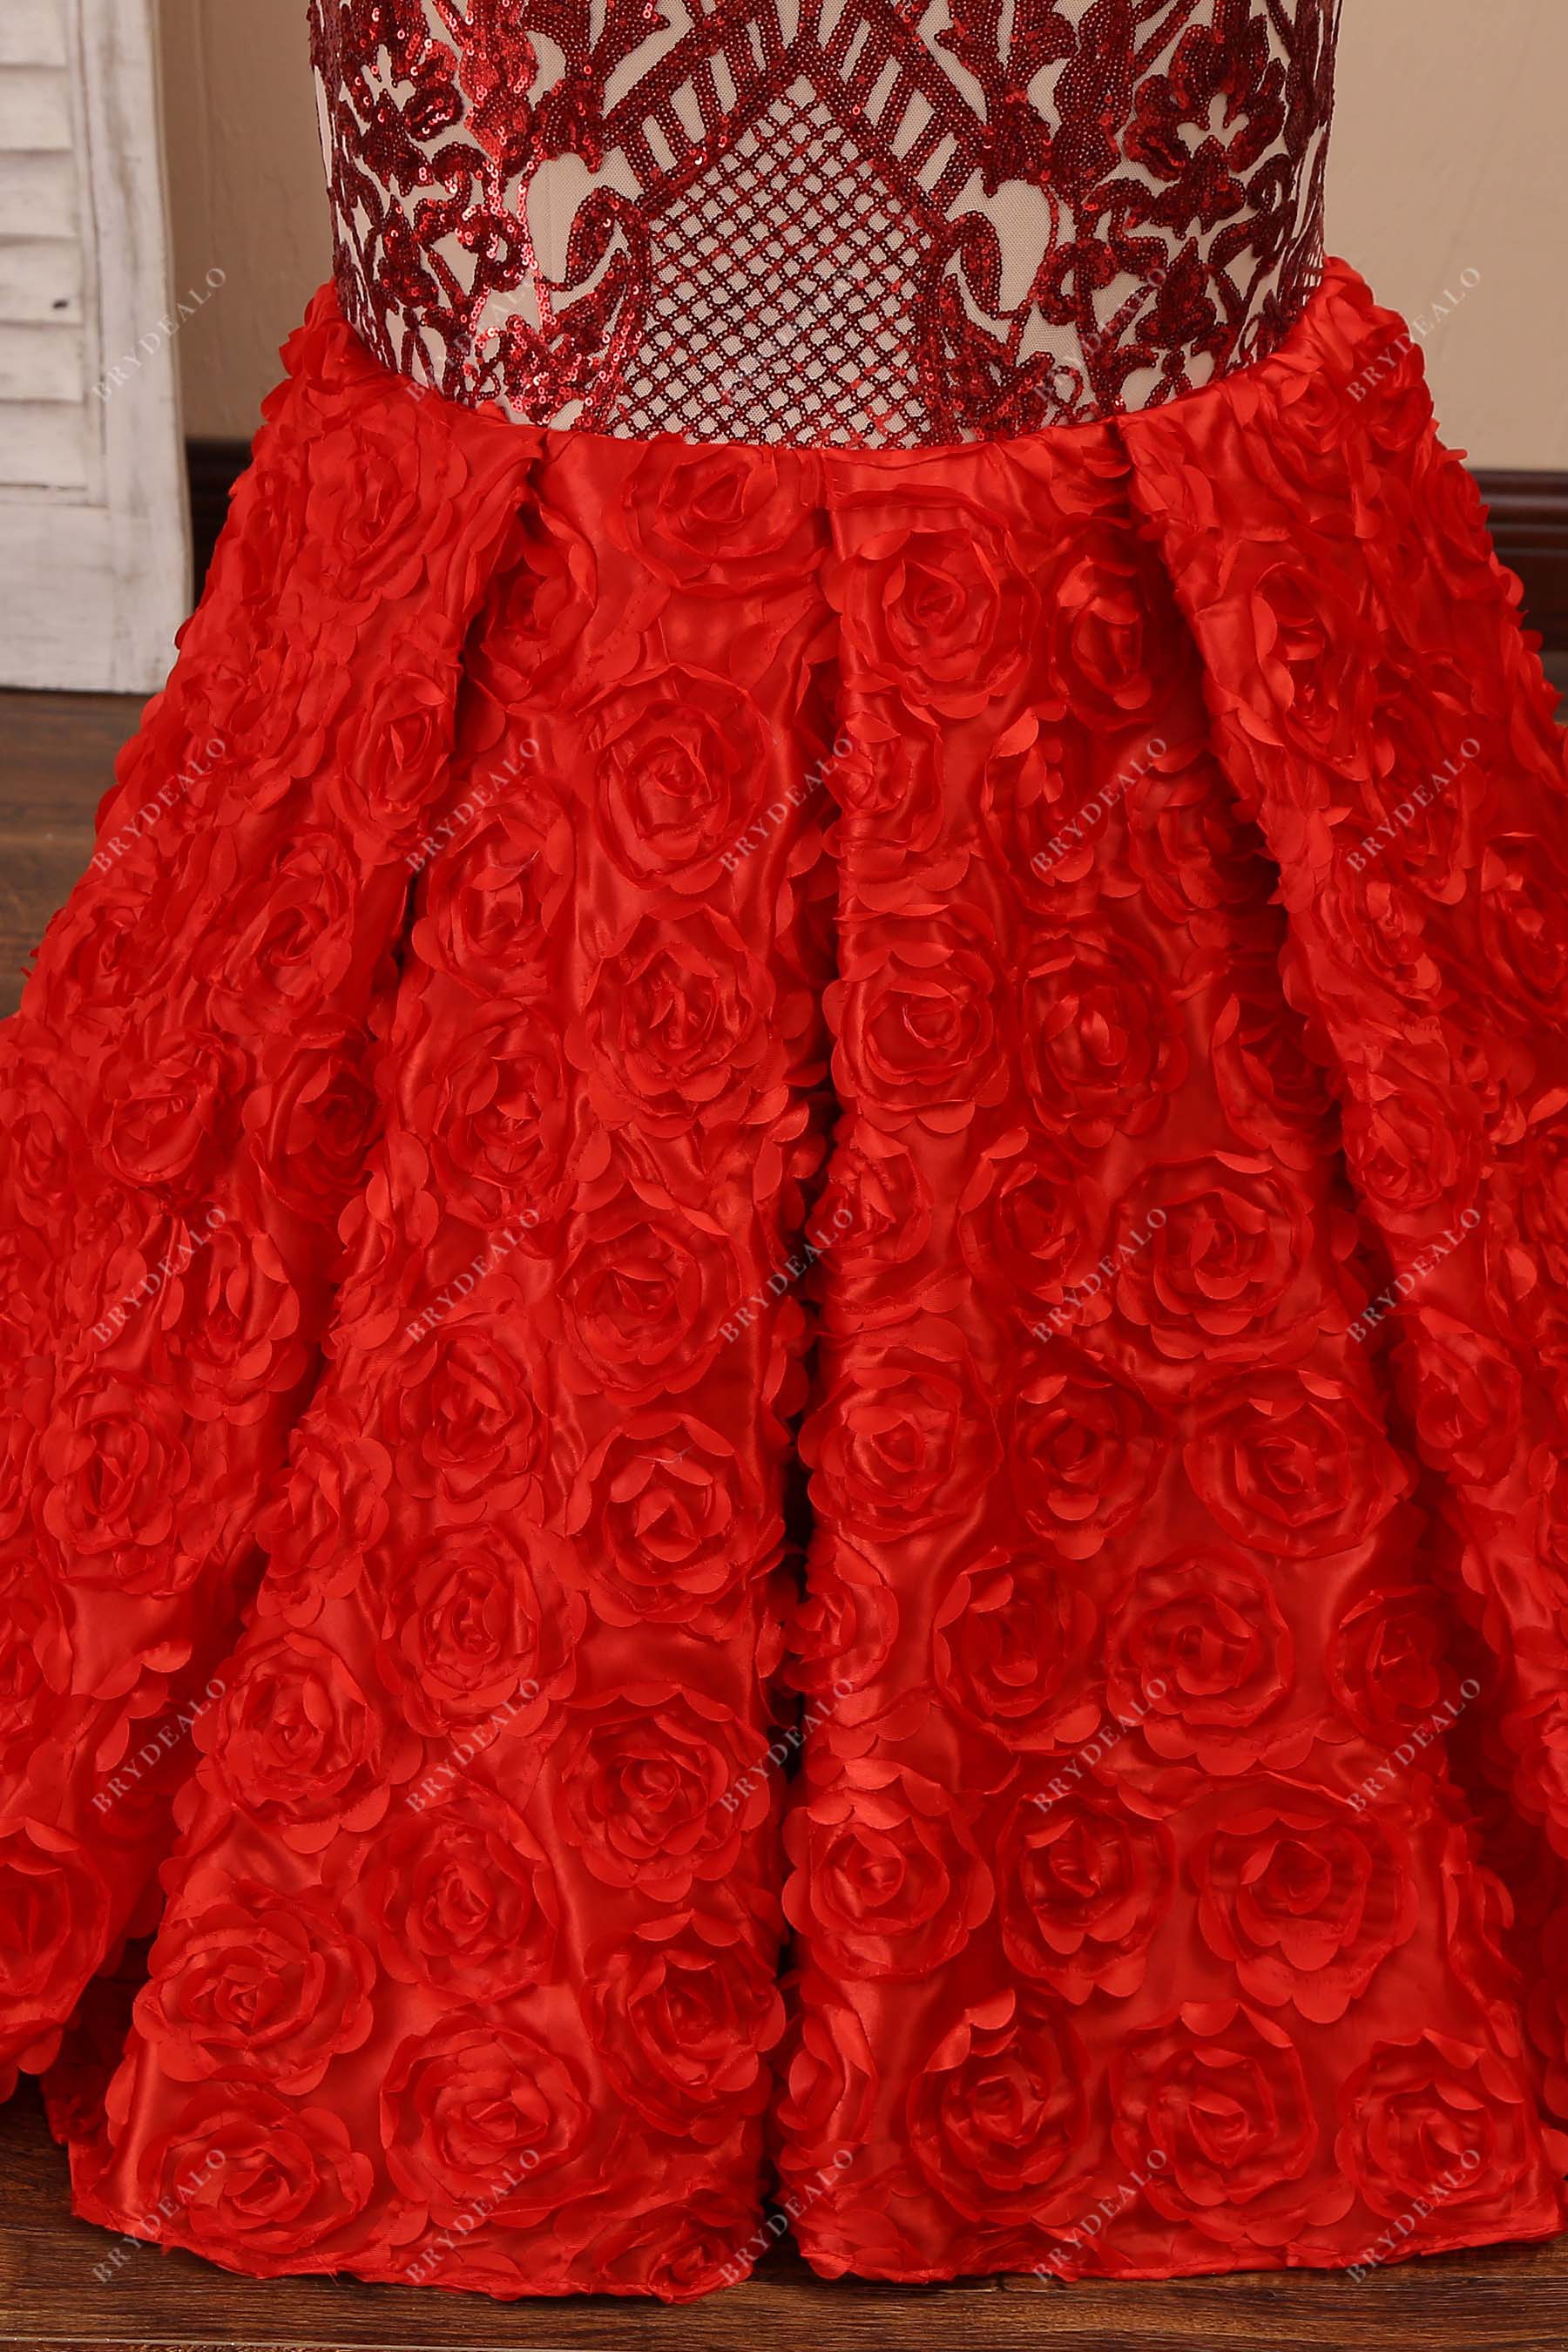 3D roses trumpet gown